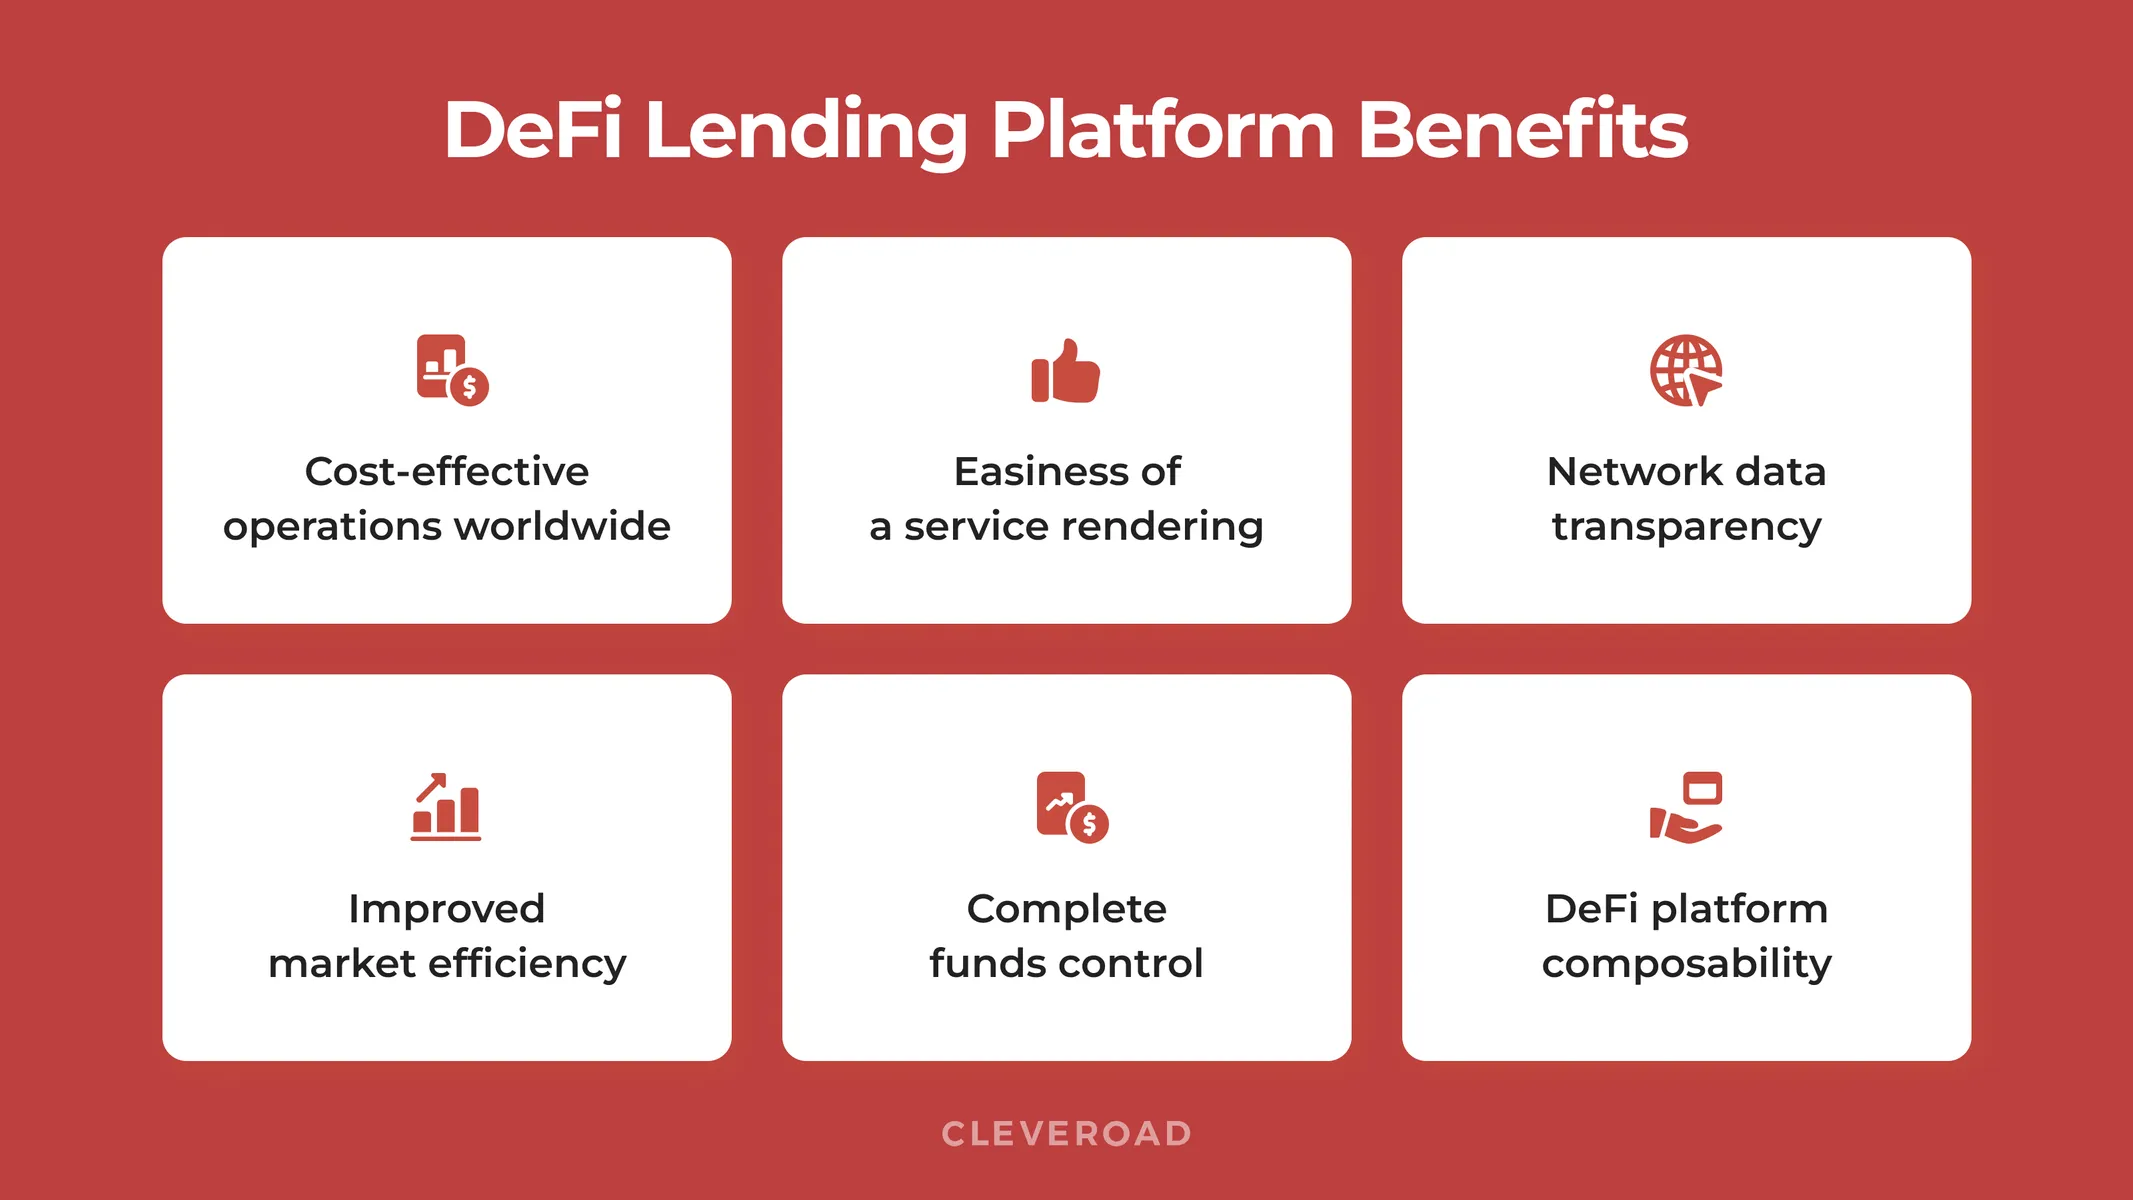 DeFi lending platform benefits